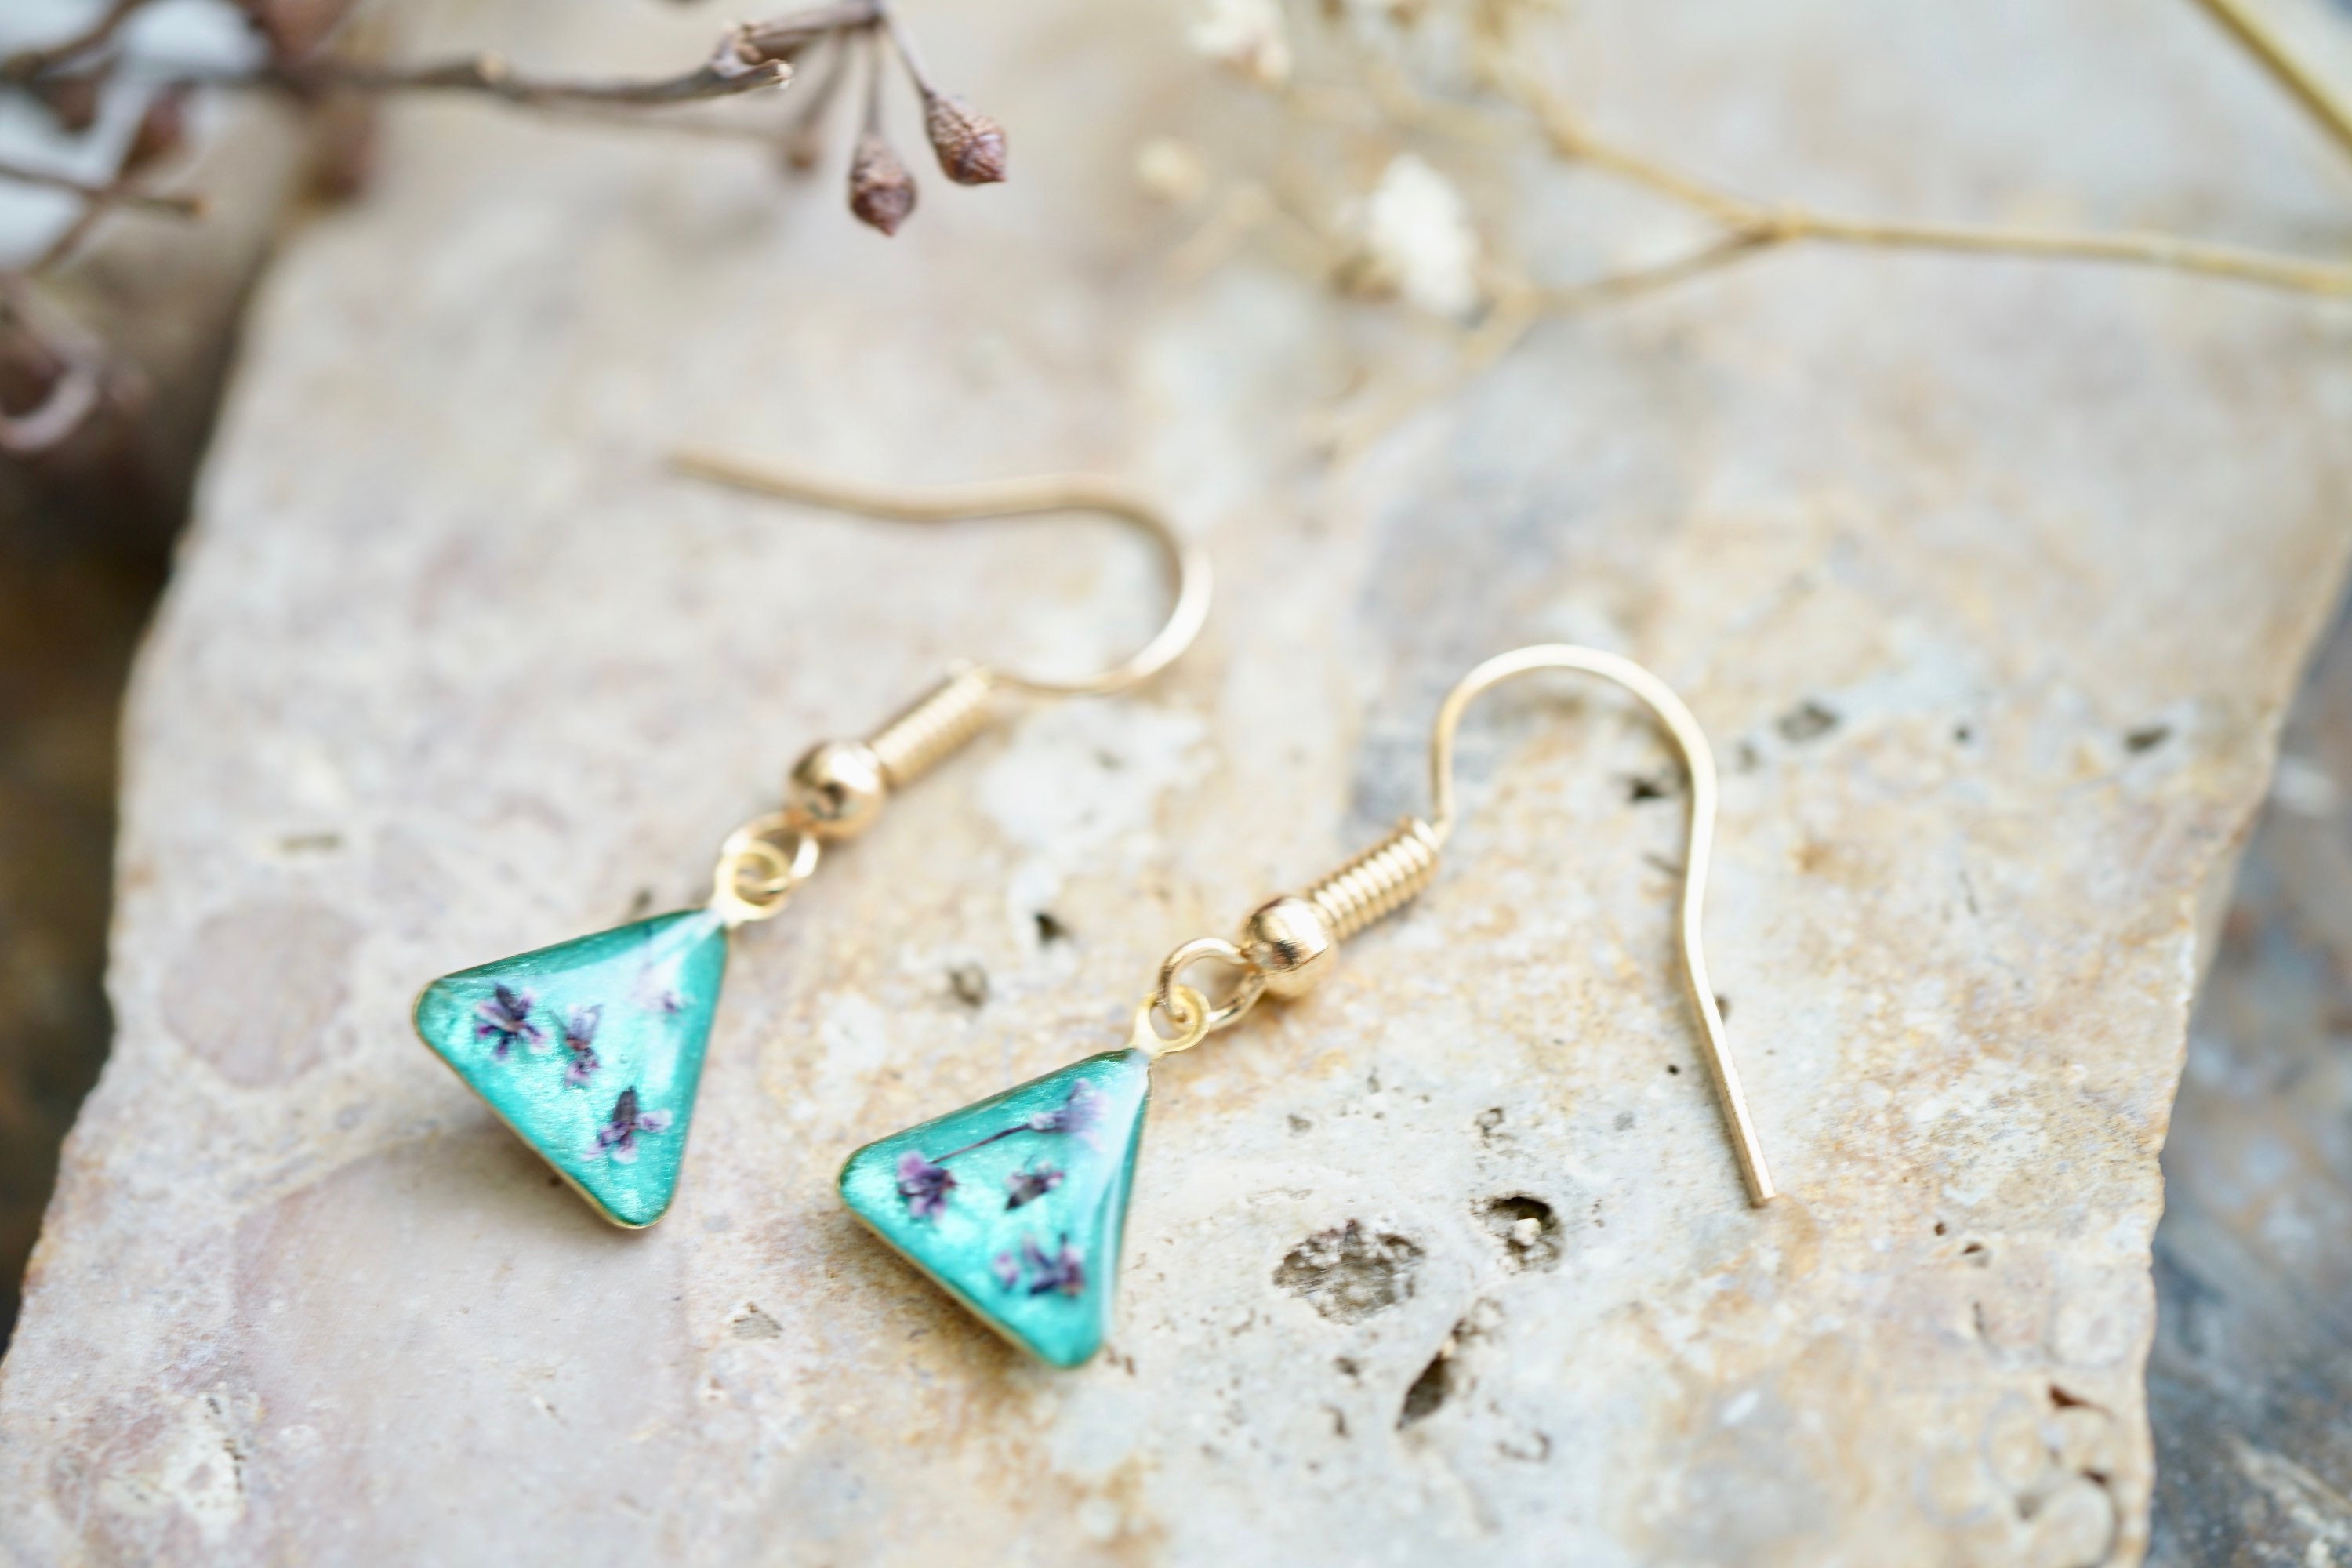 Real Pressed Flowers Earrings, Gold Drops in Purples – ann + joy